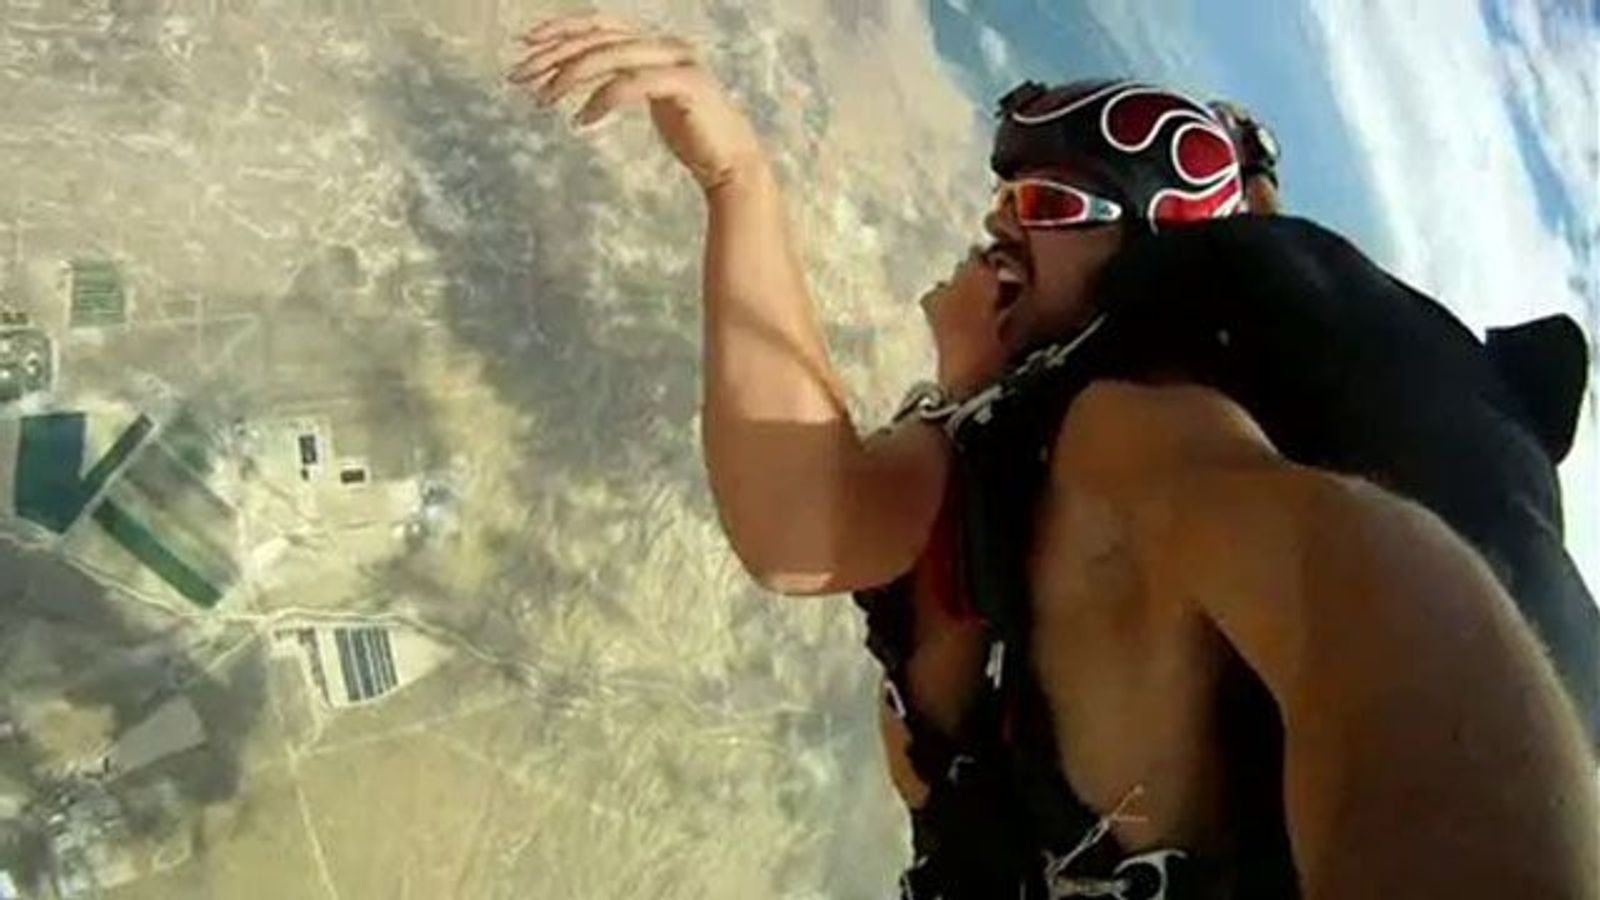 FAA: Skydiving Sex Stunt Did Not Violate Federal Regulations